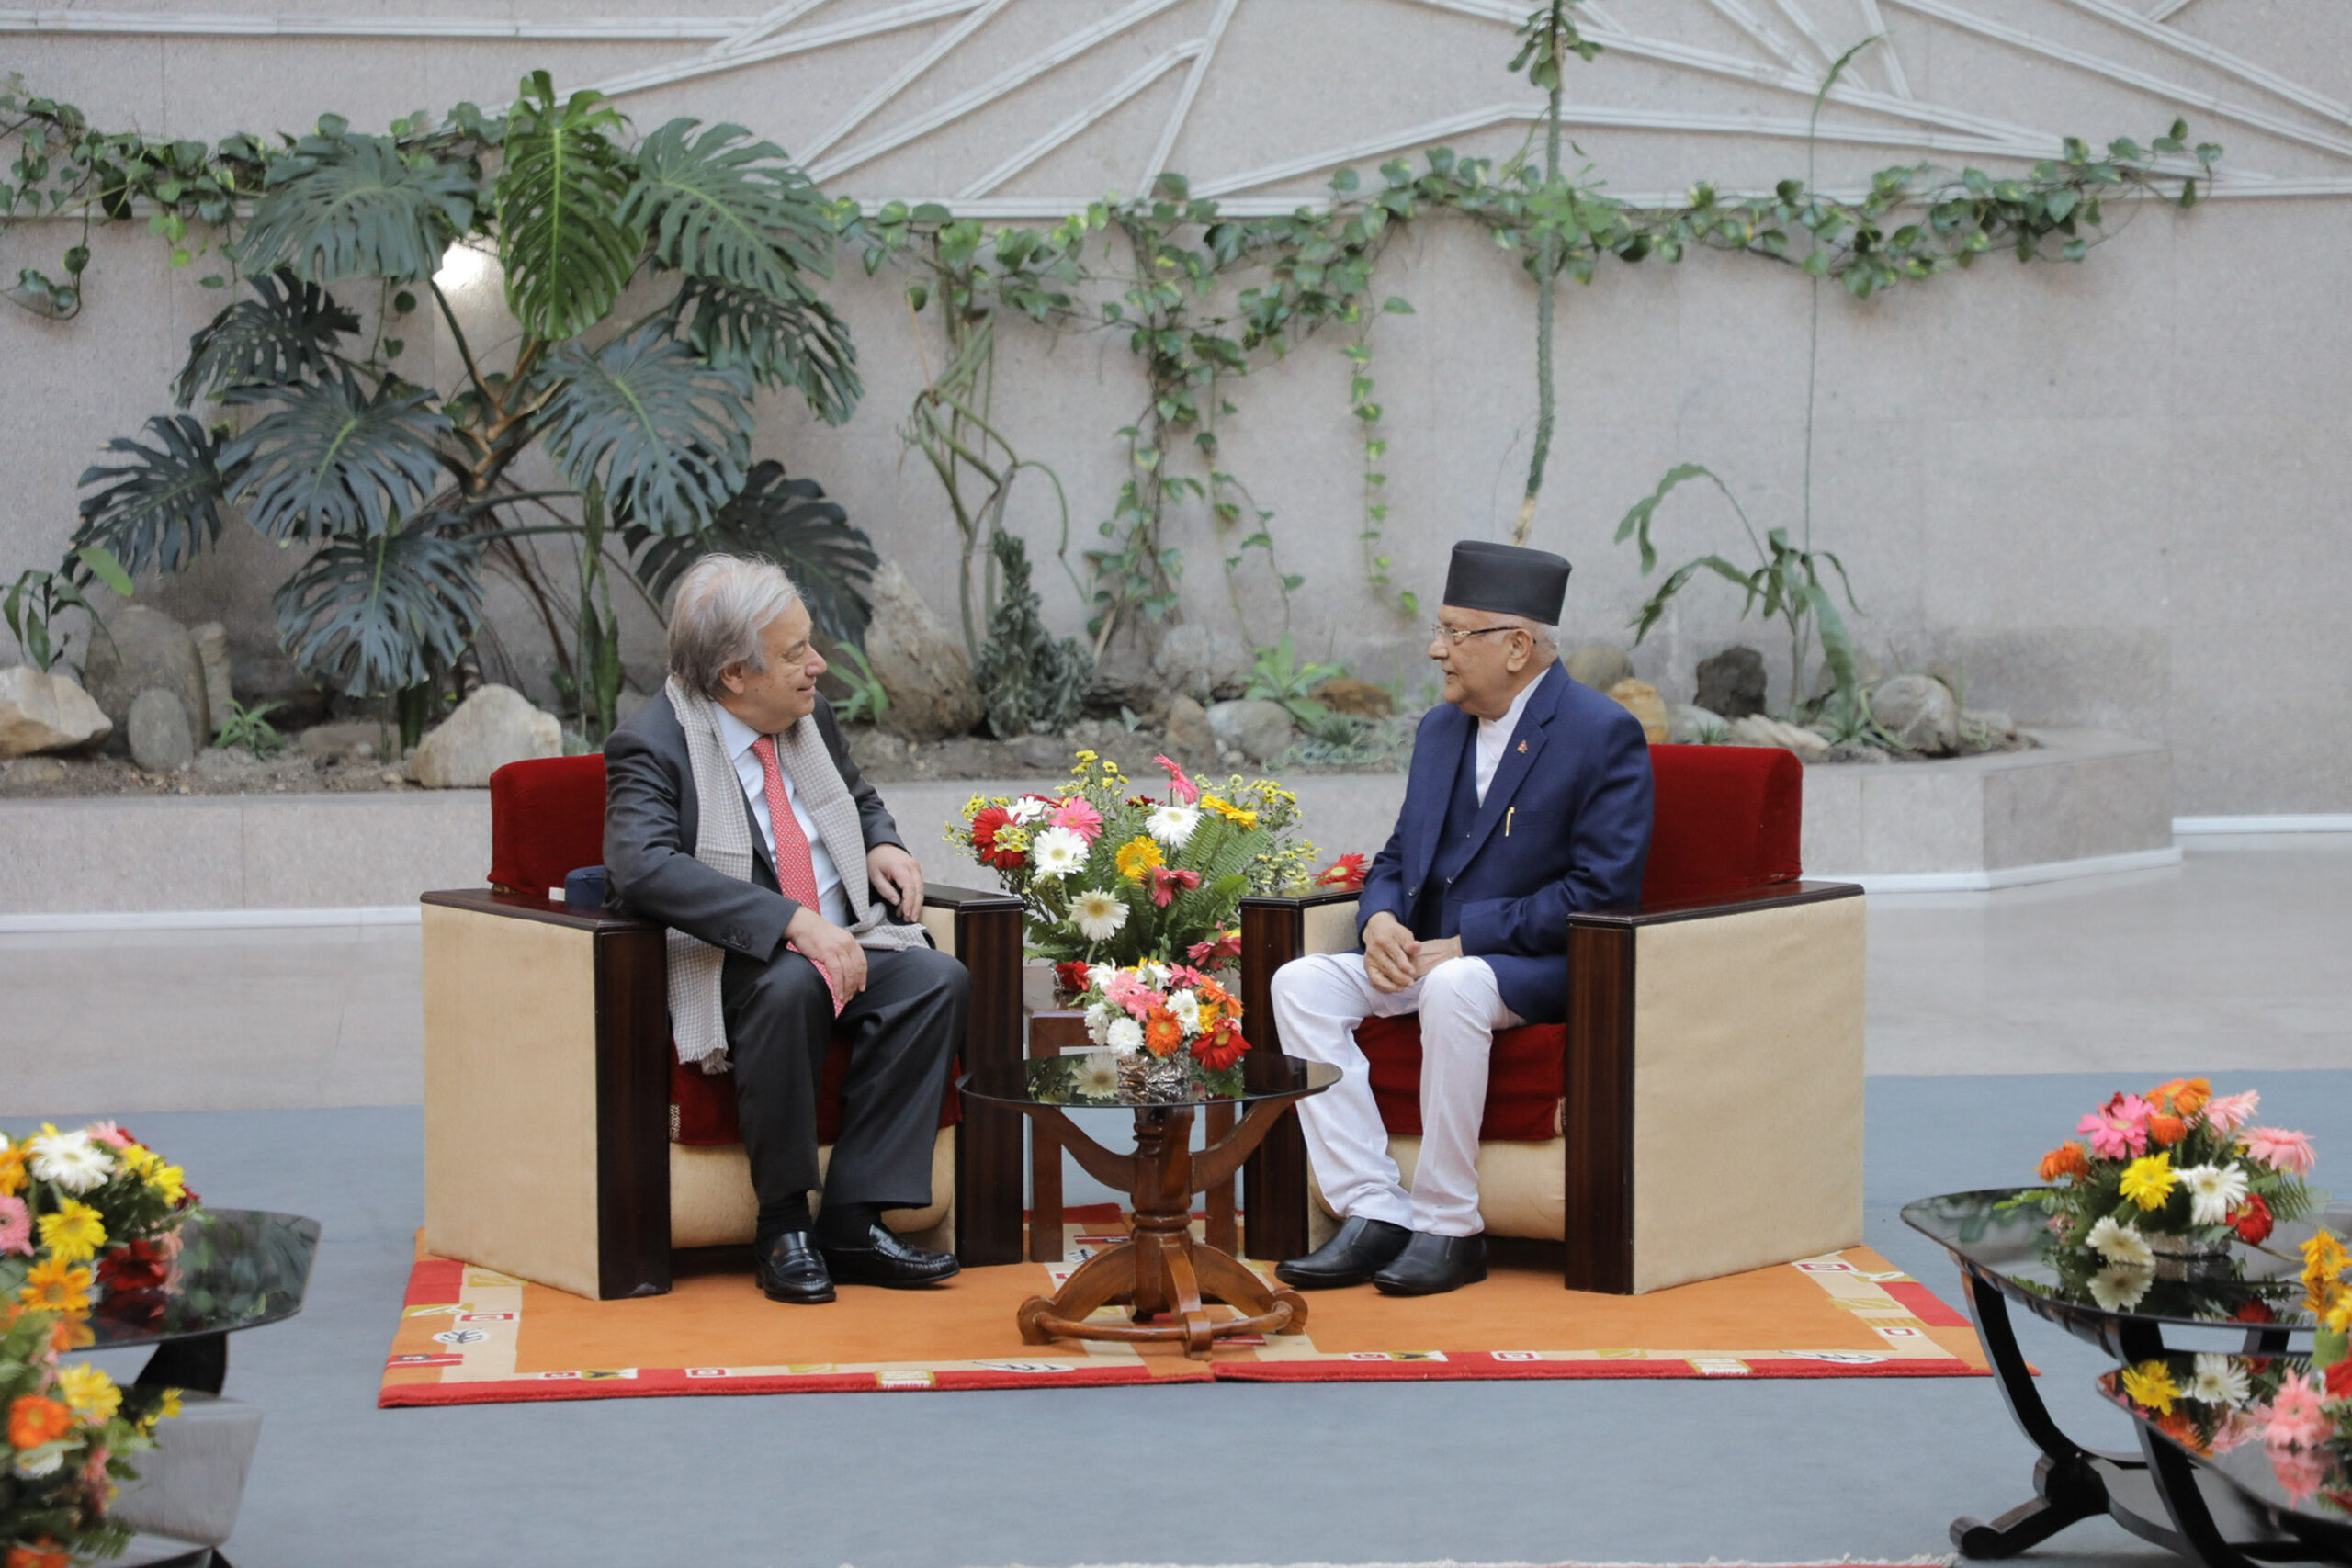 Maoist Chairman Prachanda ‘disrupting’ Nepal’s peace process, UML Chair Oli tells Guterres